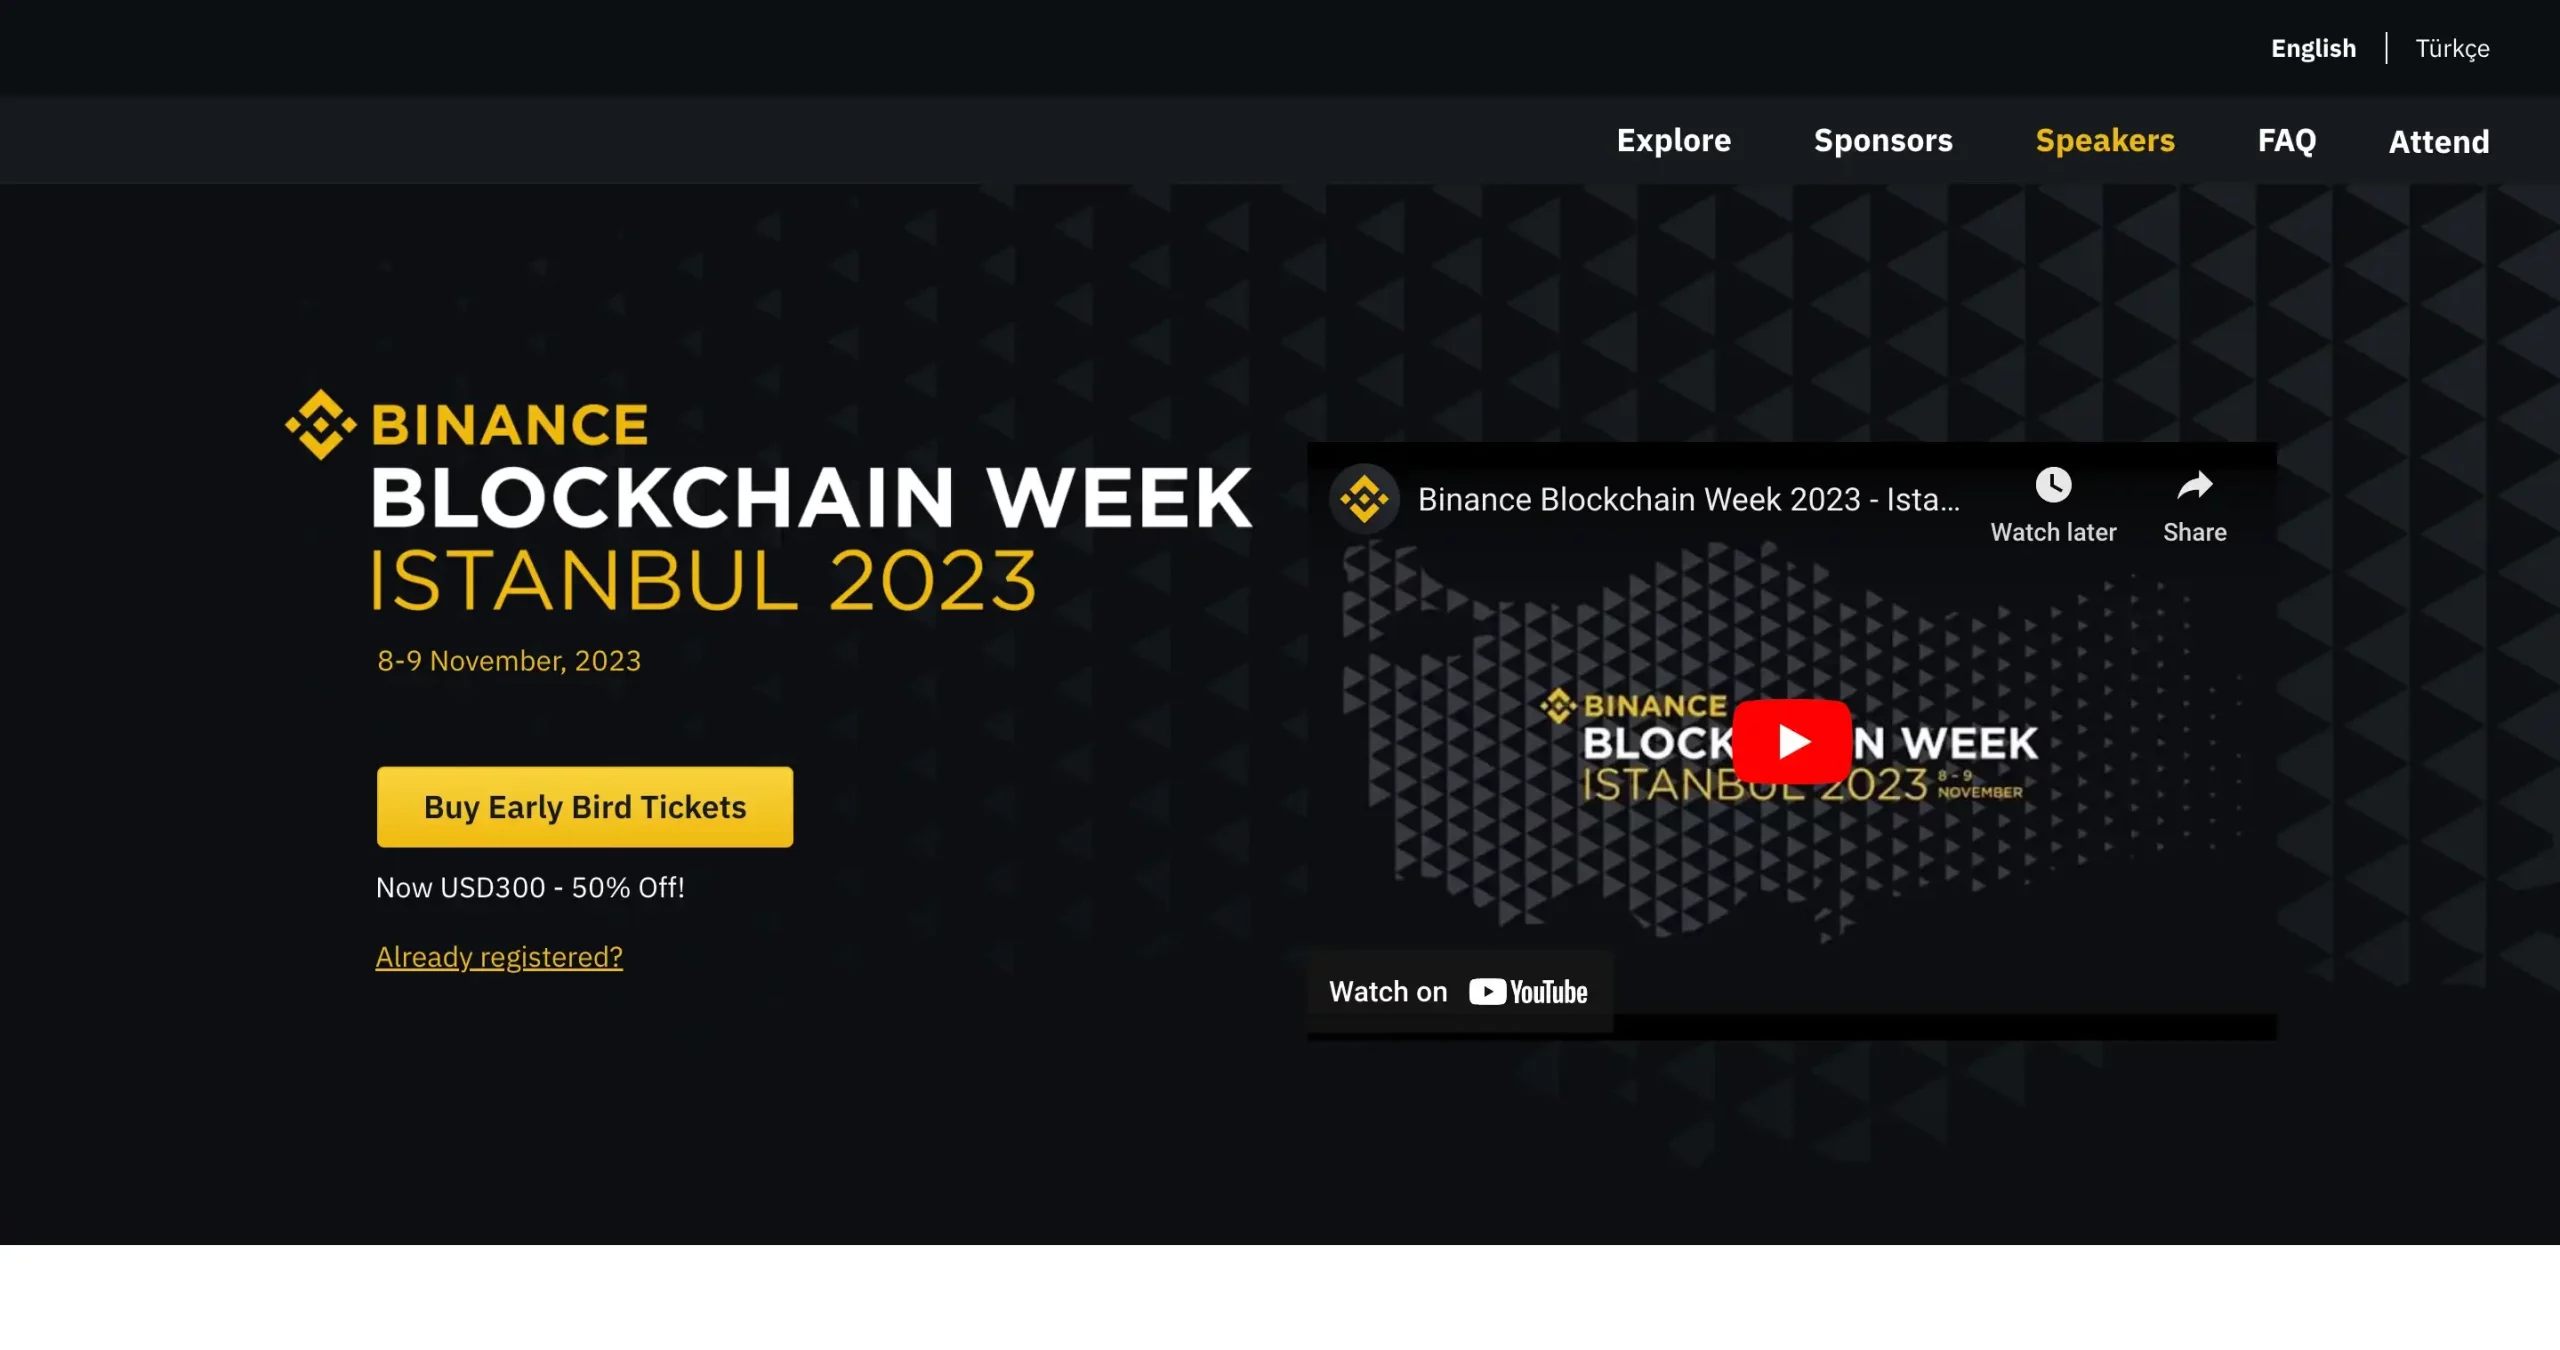 6. Binance Blockchain Week 